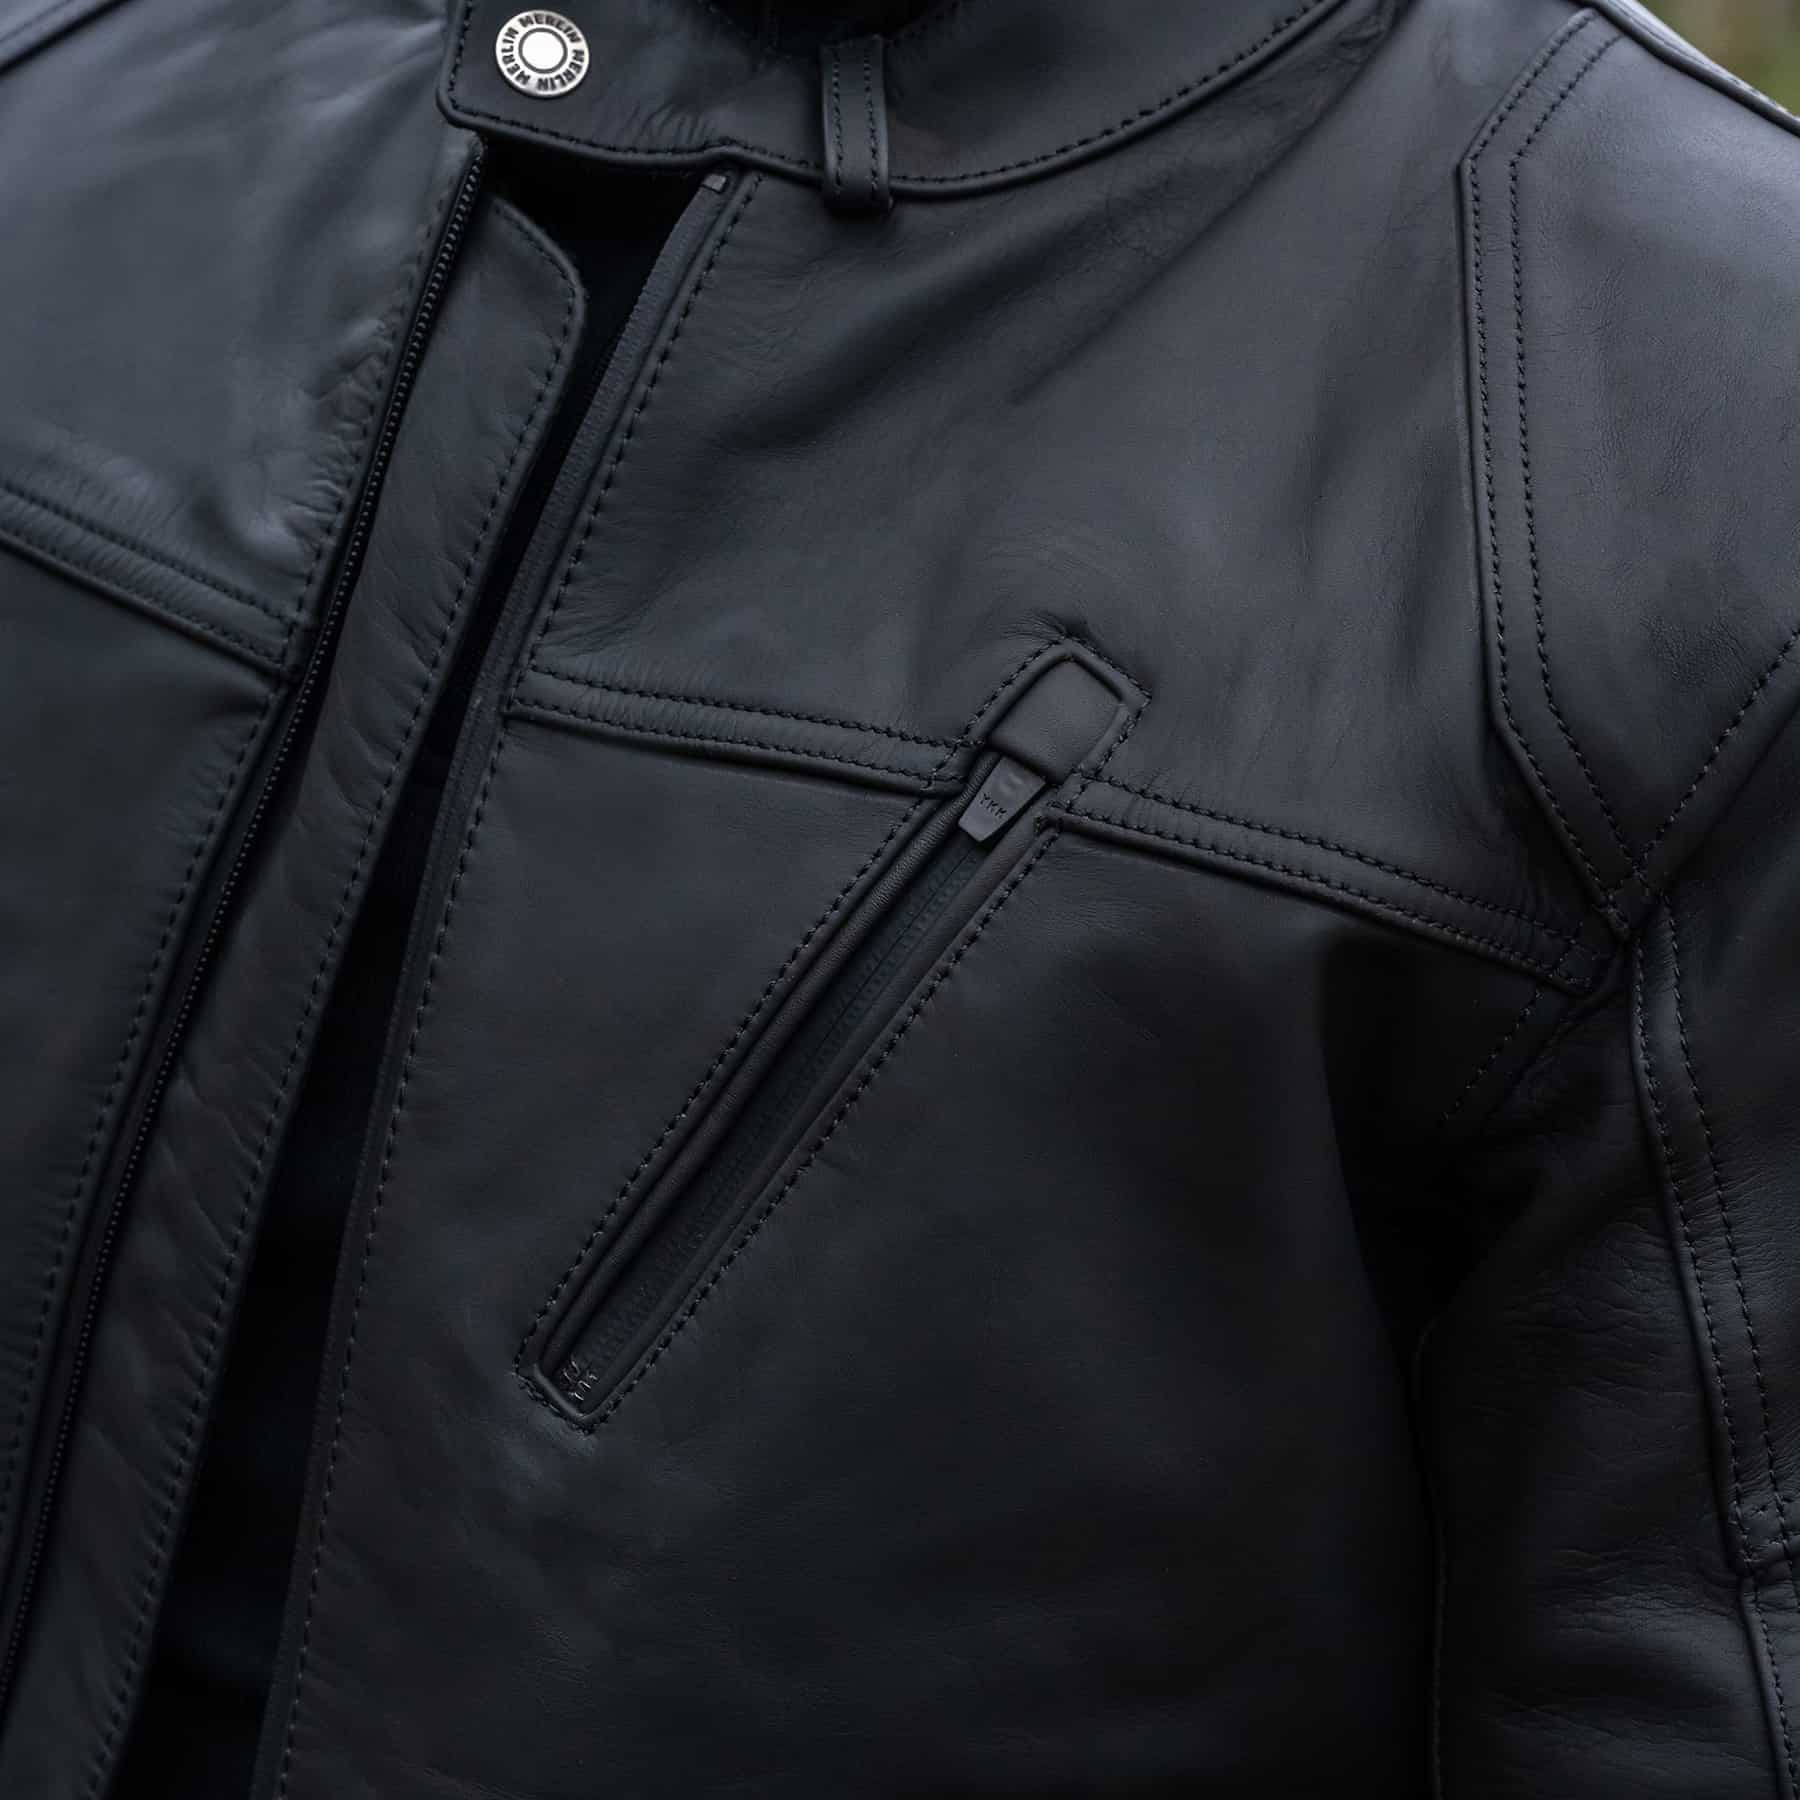 Merlin Gable leather jacket in black